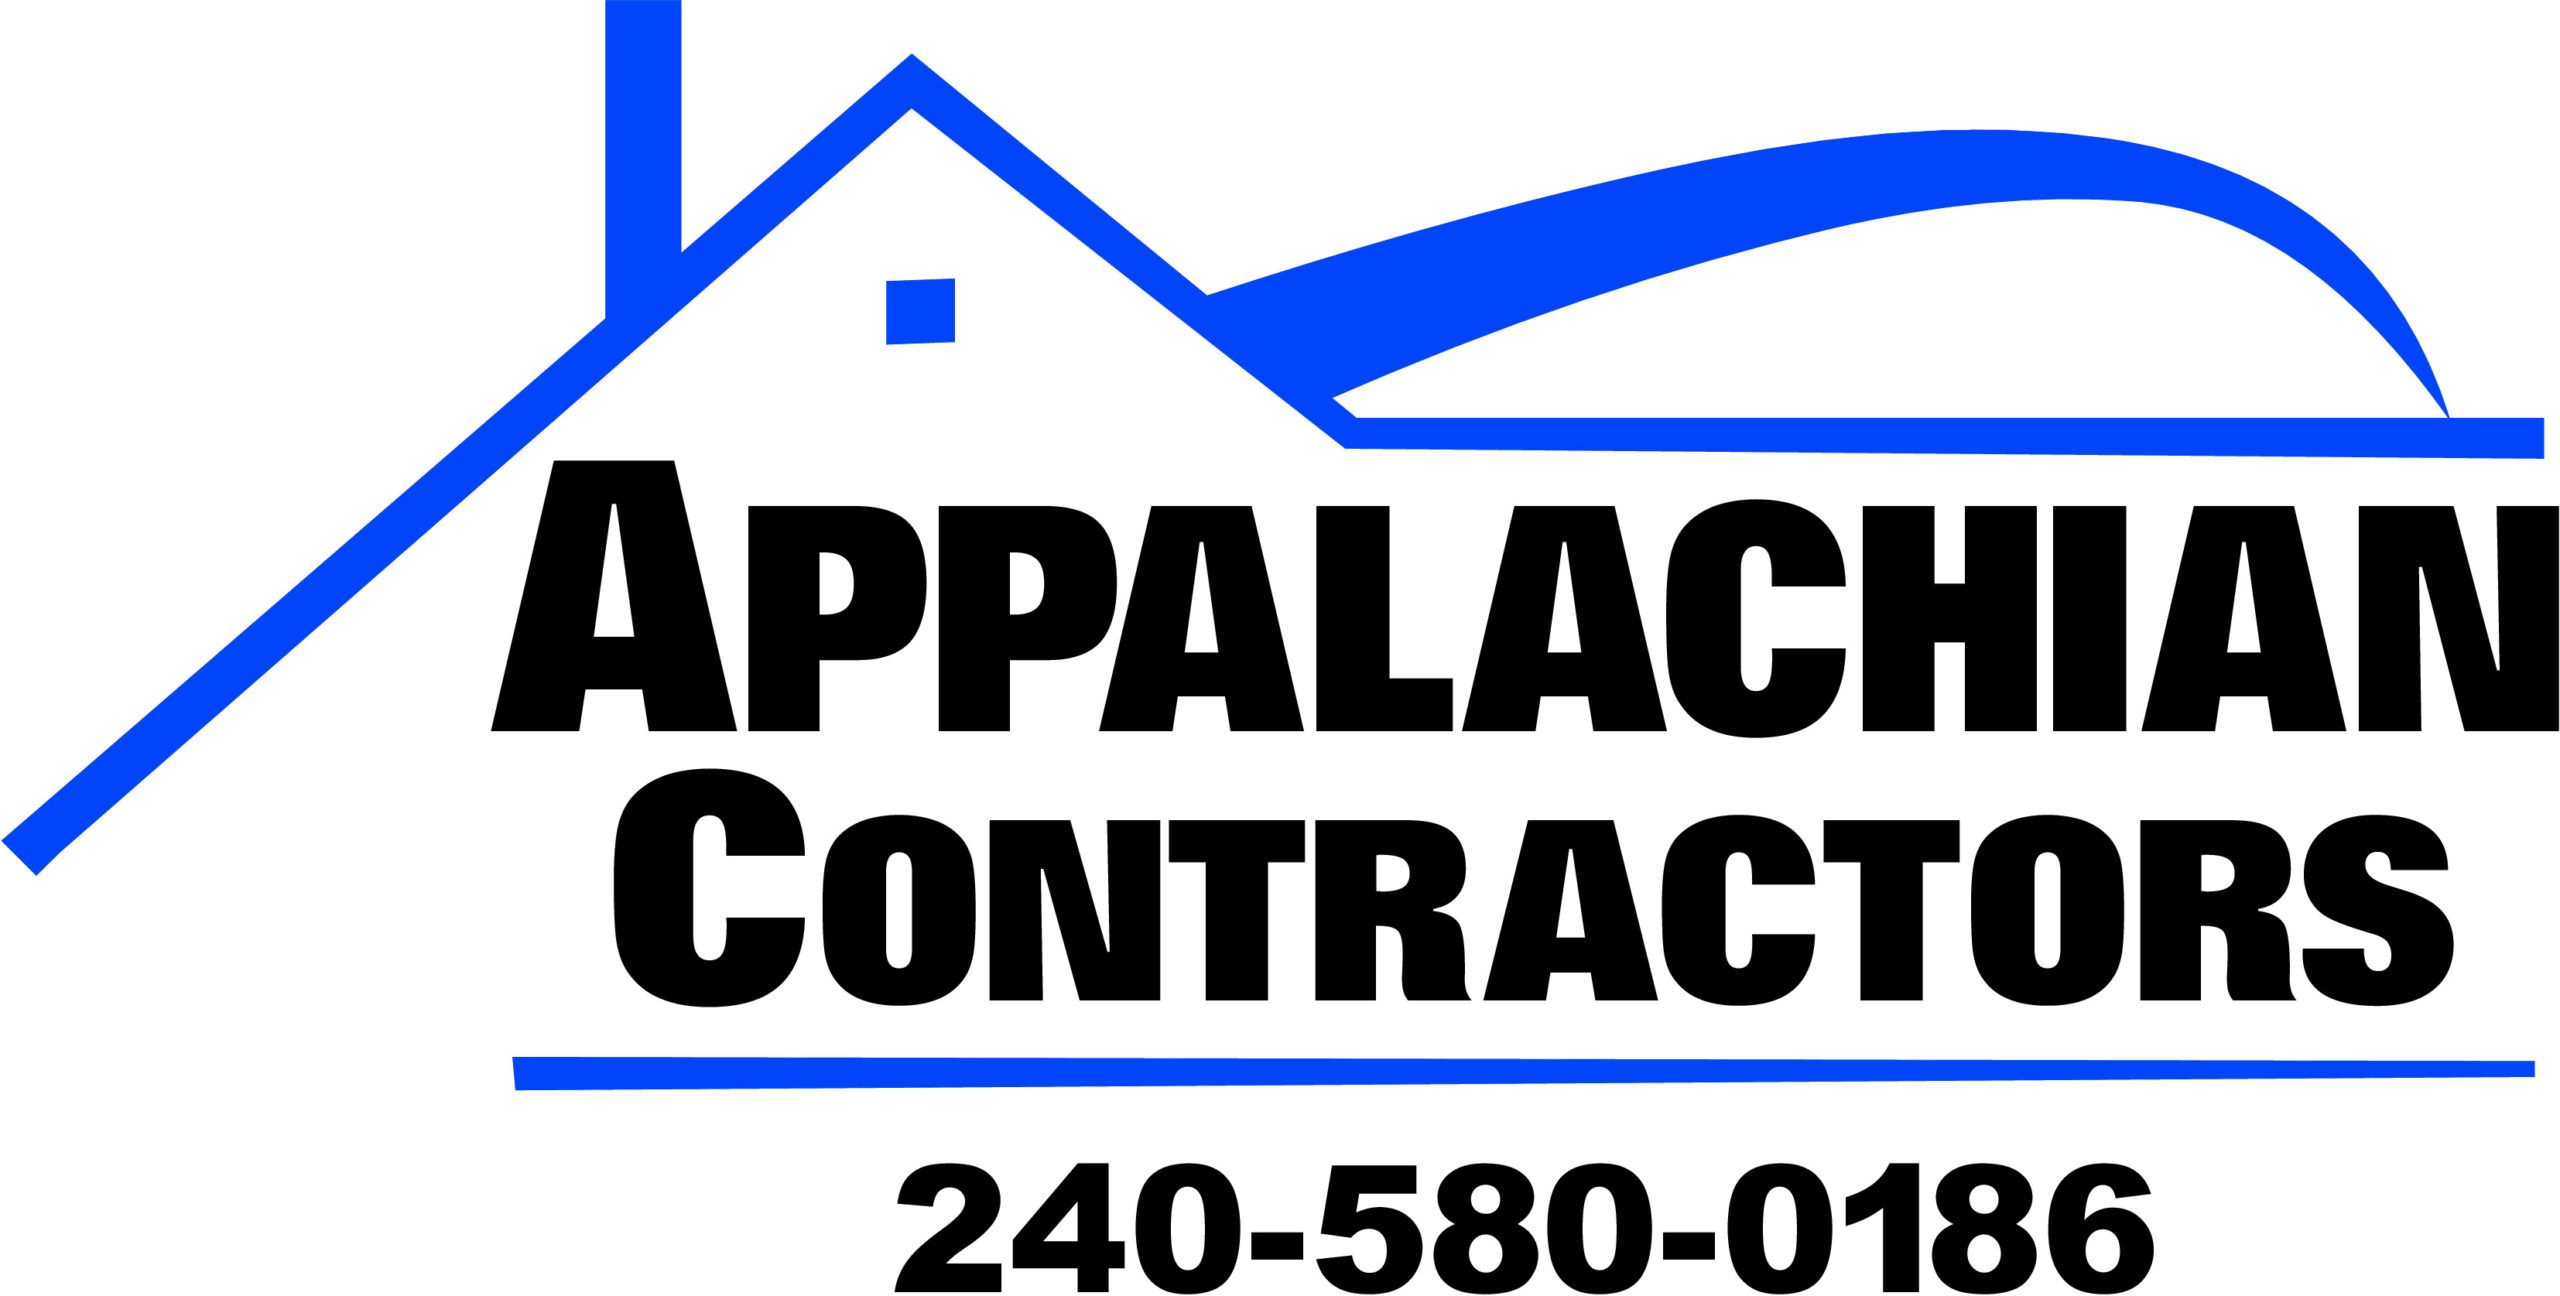 Appalachian Contractors - Professional Building and Renovation Service